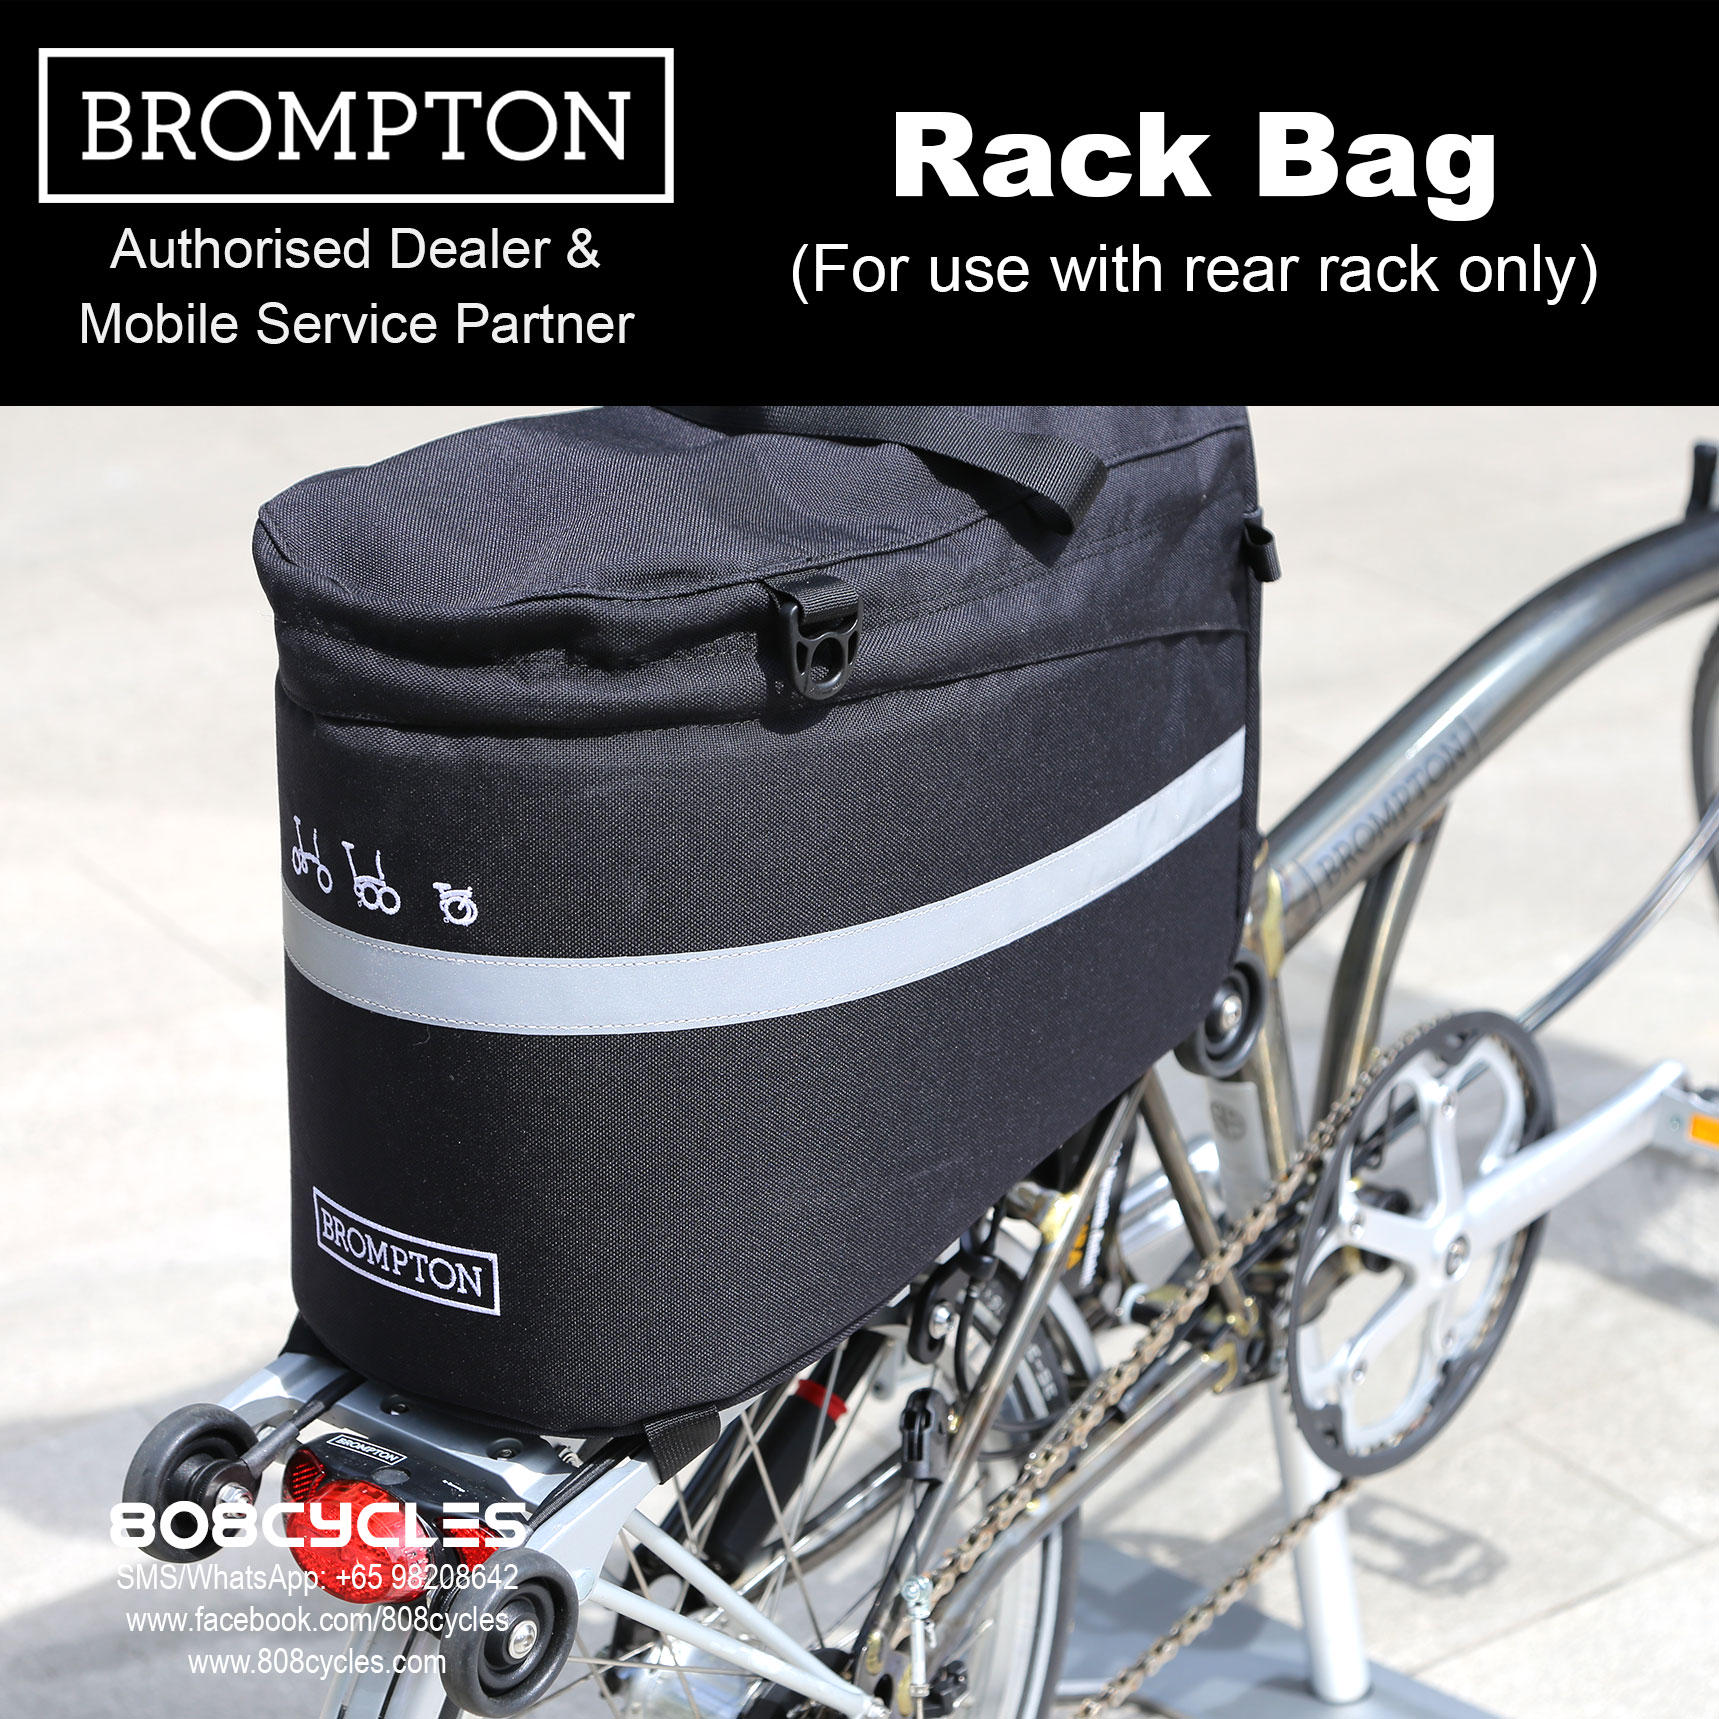 brompton back rack bag